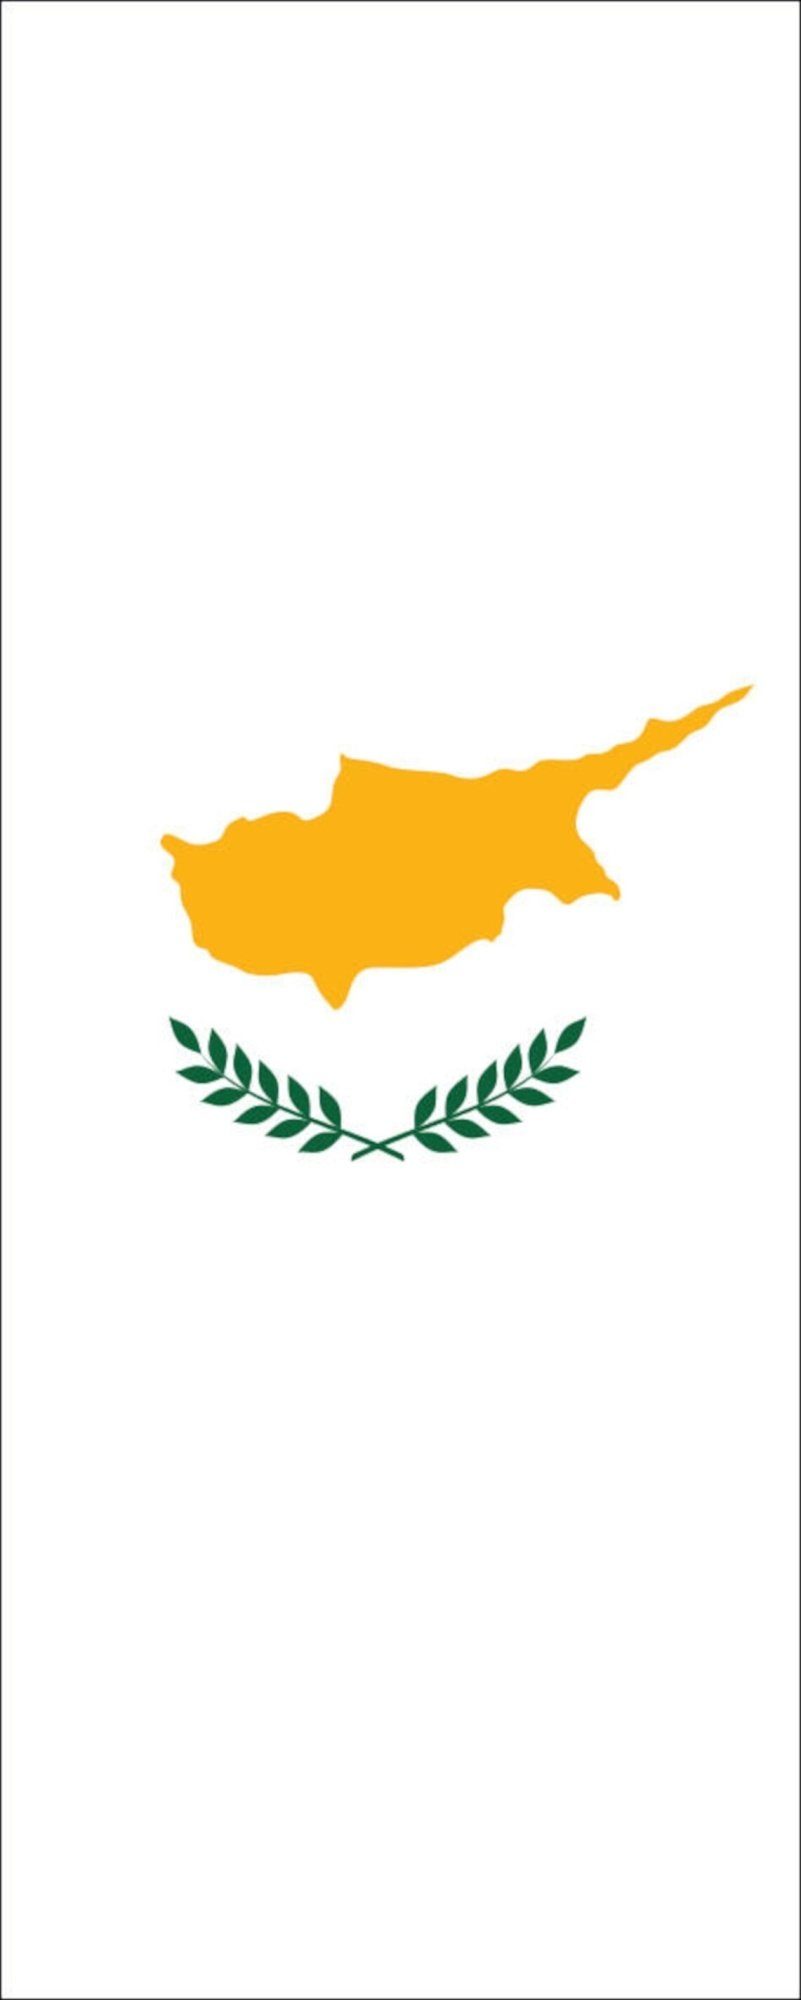 Flagge Hochformat g/m² 110 Zypern Flagge flaggenmeer